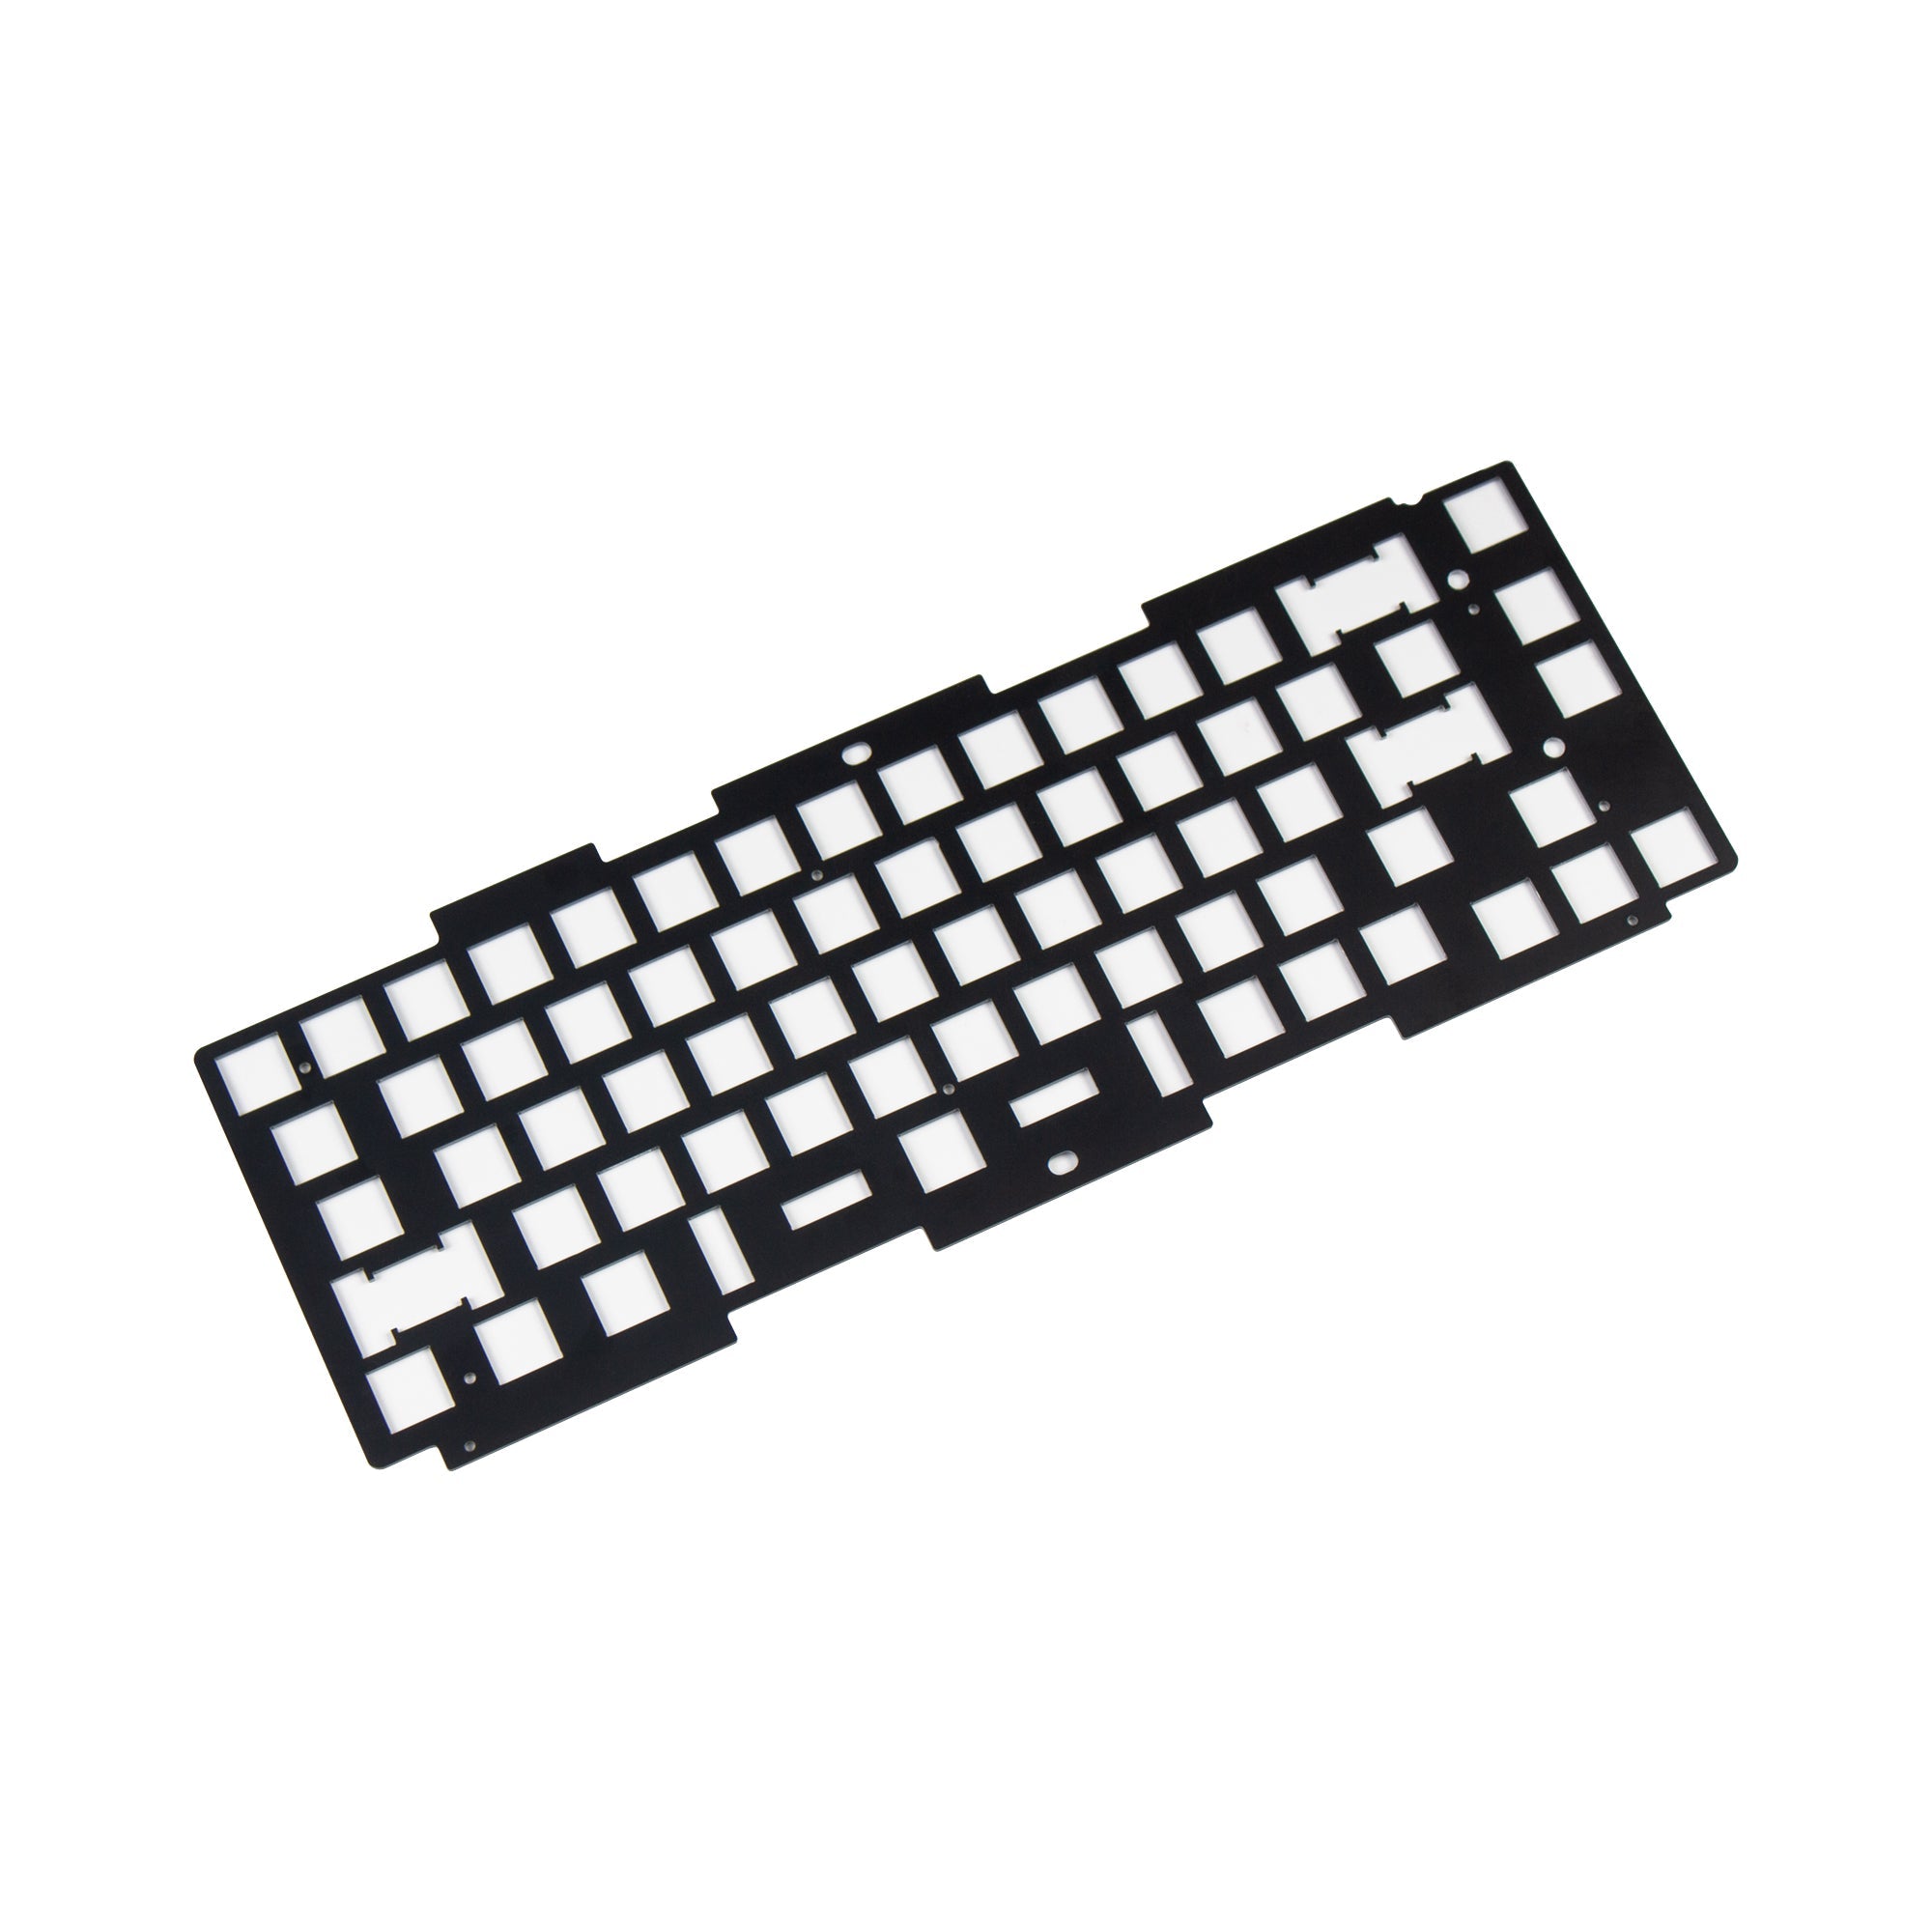 Keychron q2 custom mechanical keyboard fr4 plate for ansi layout